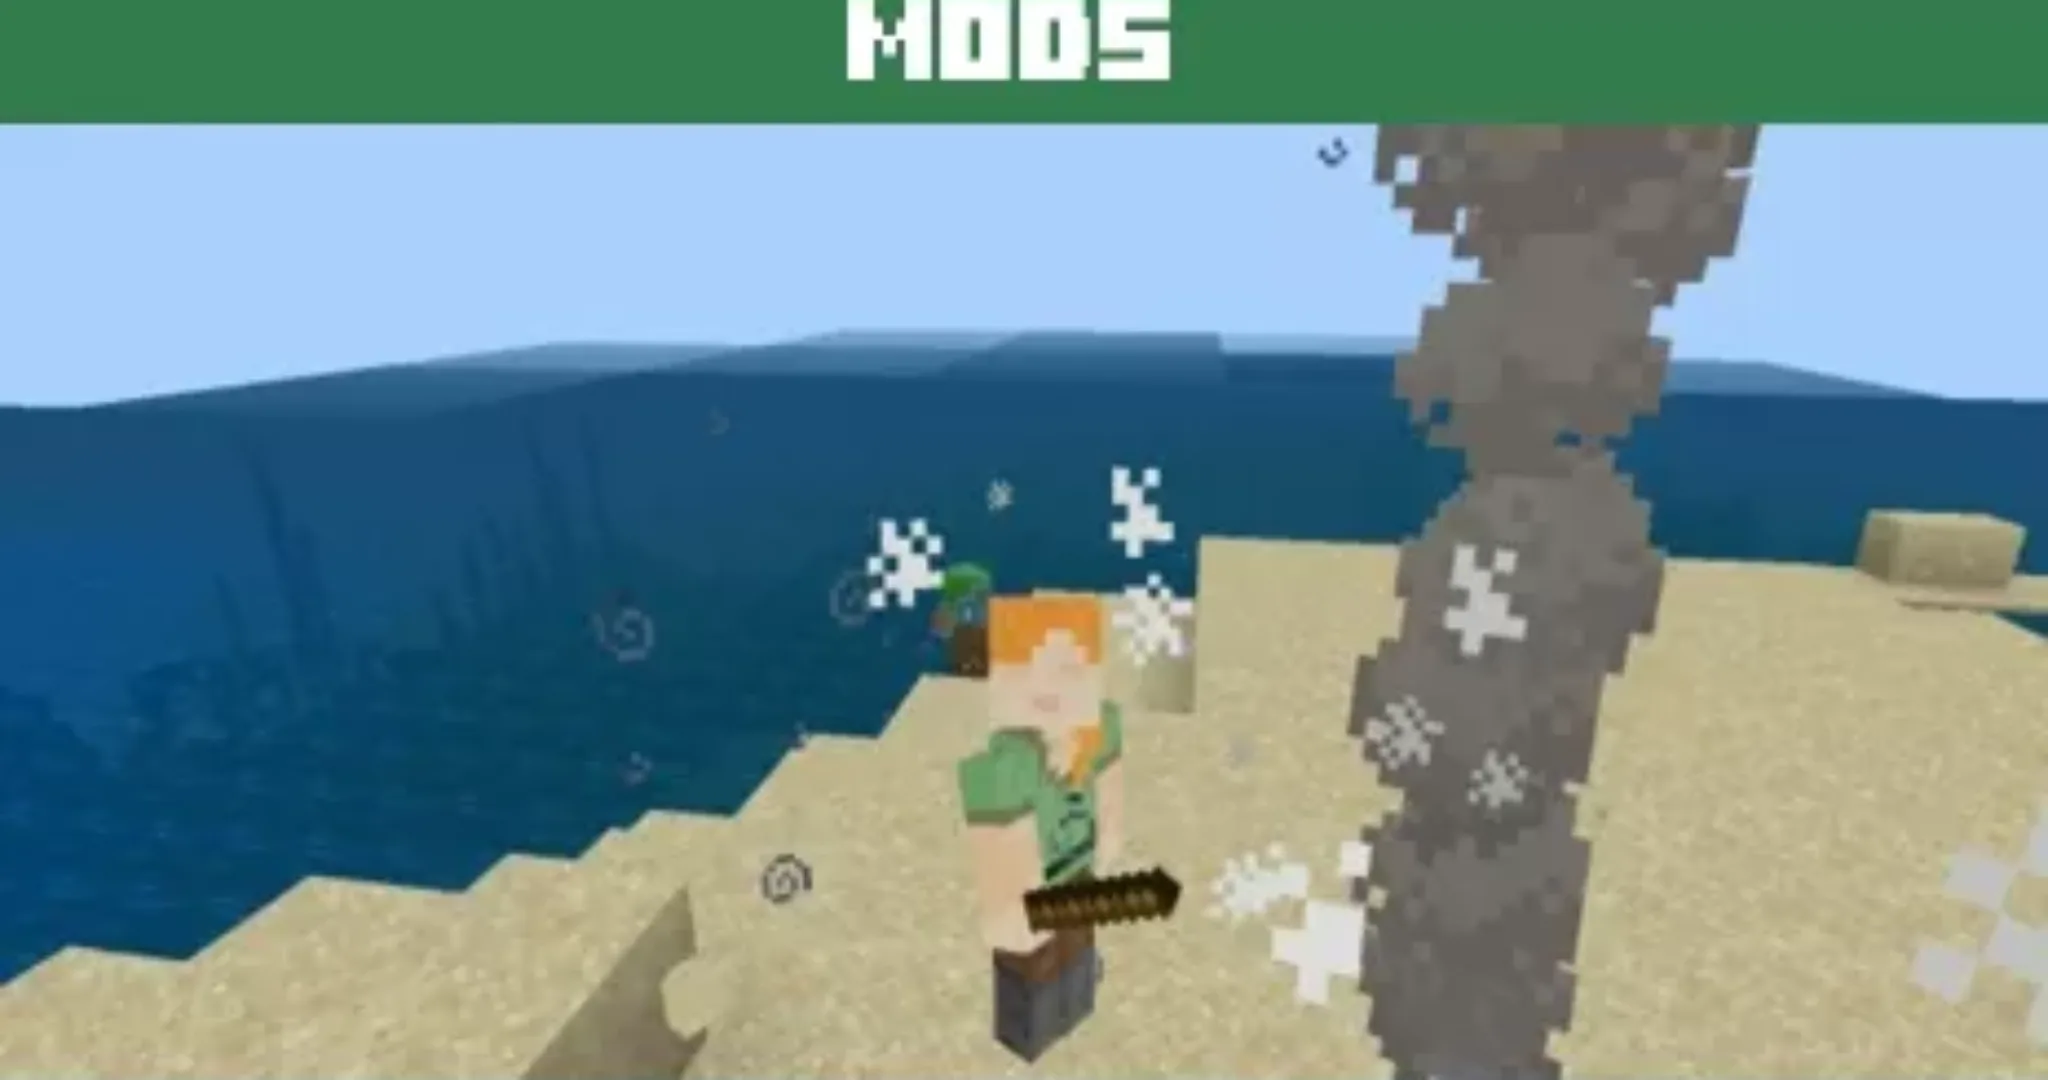 Storm Mod for Minecraft PE